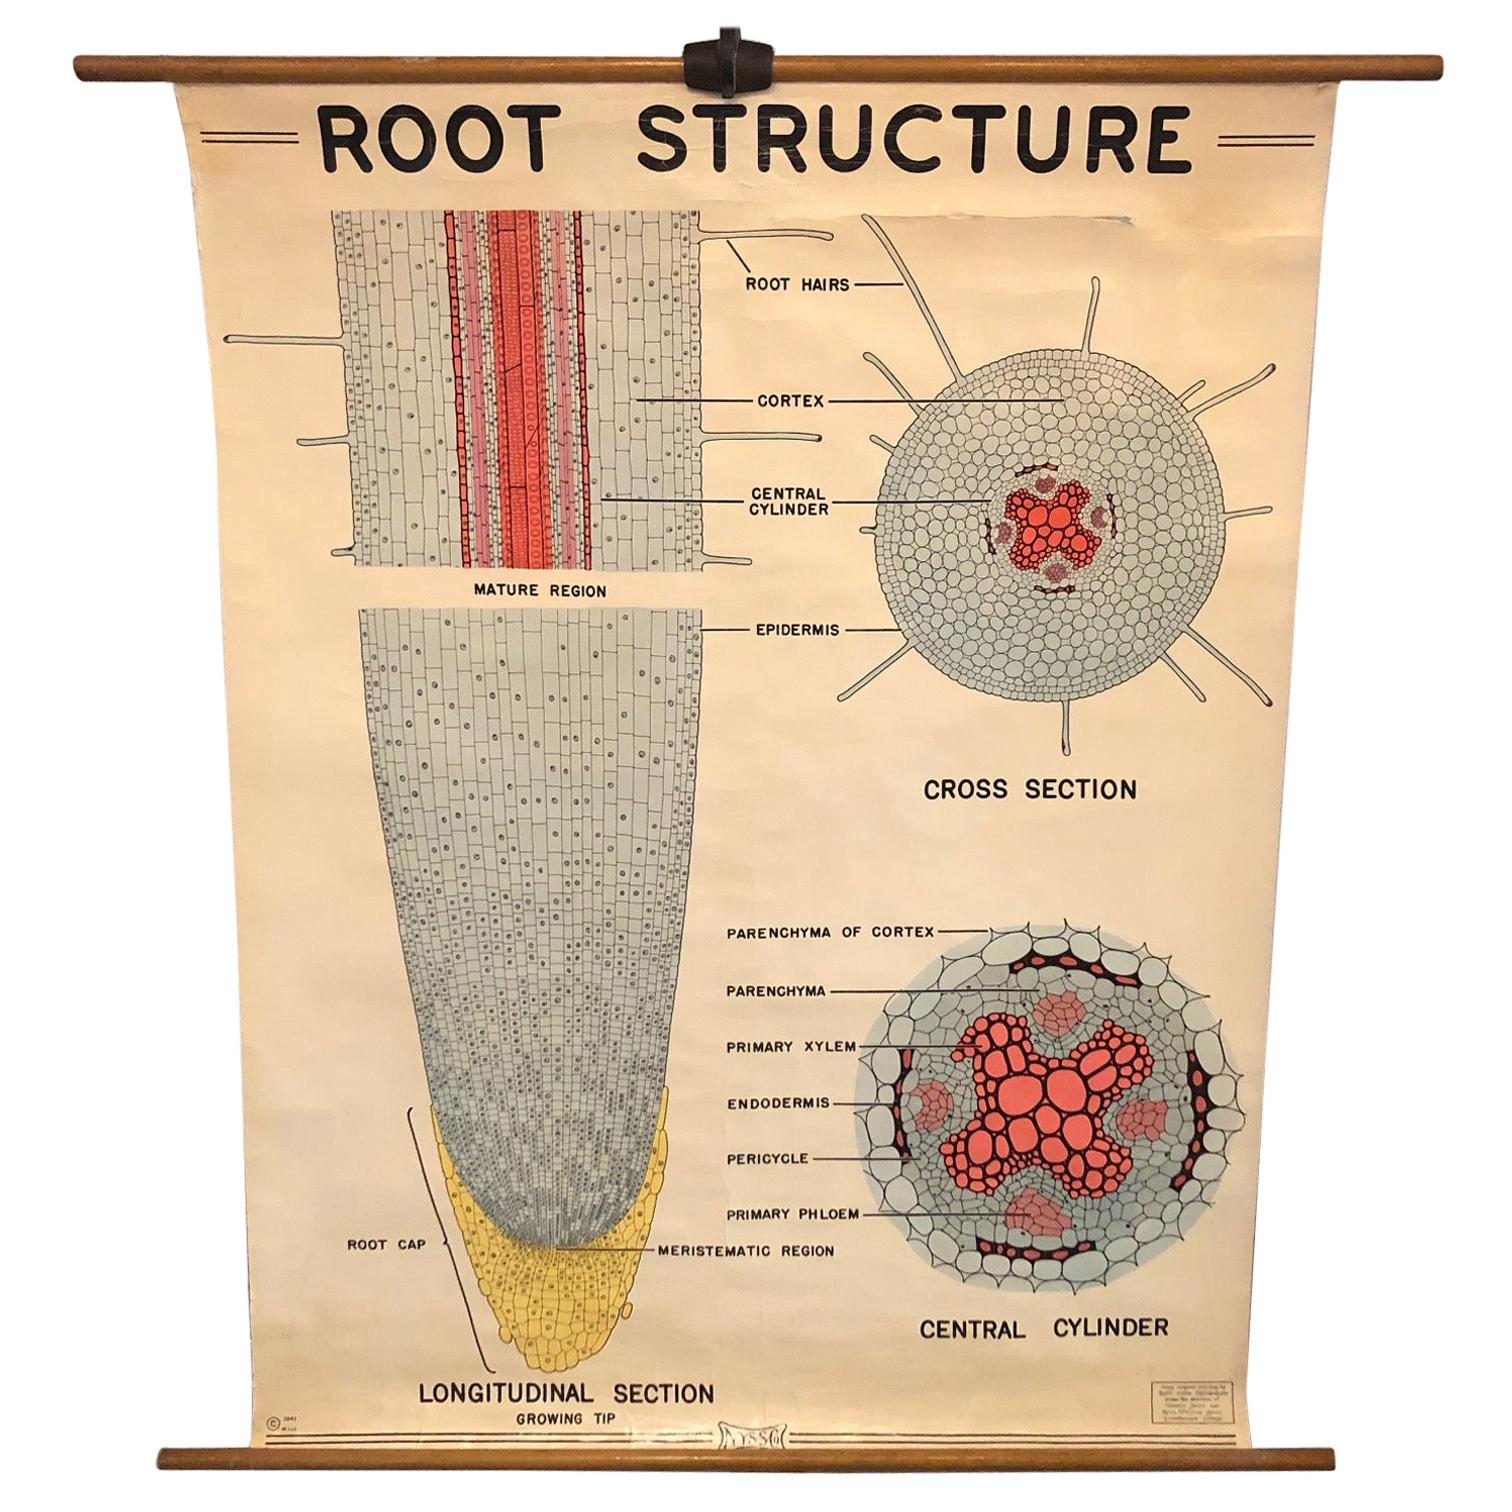 Tableau de la structure de la racine botanique éducative de New York Scientific Supply Co.